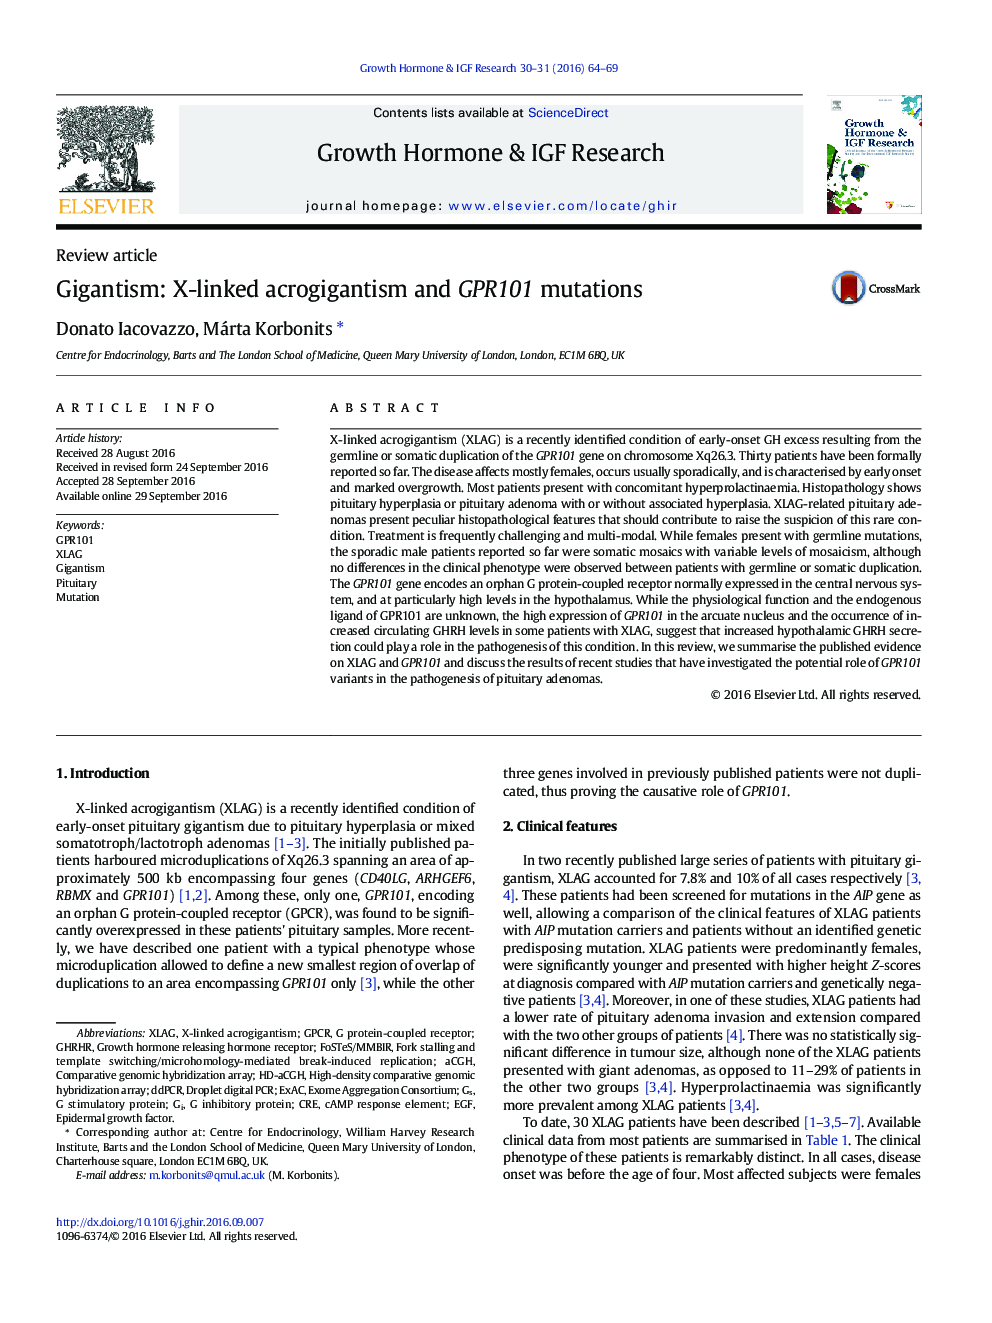 Gigantism: X-linked acrogigantism and GPR101 mutations